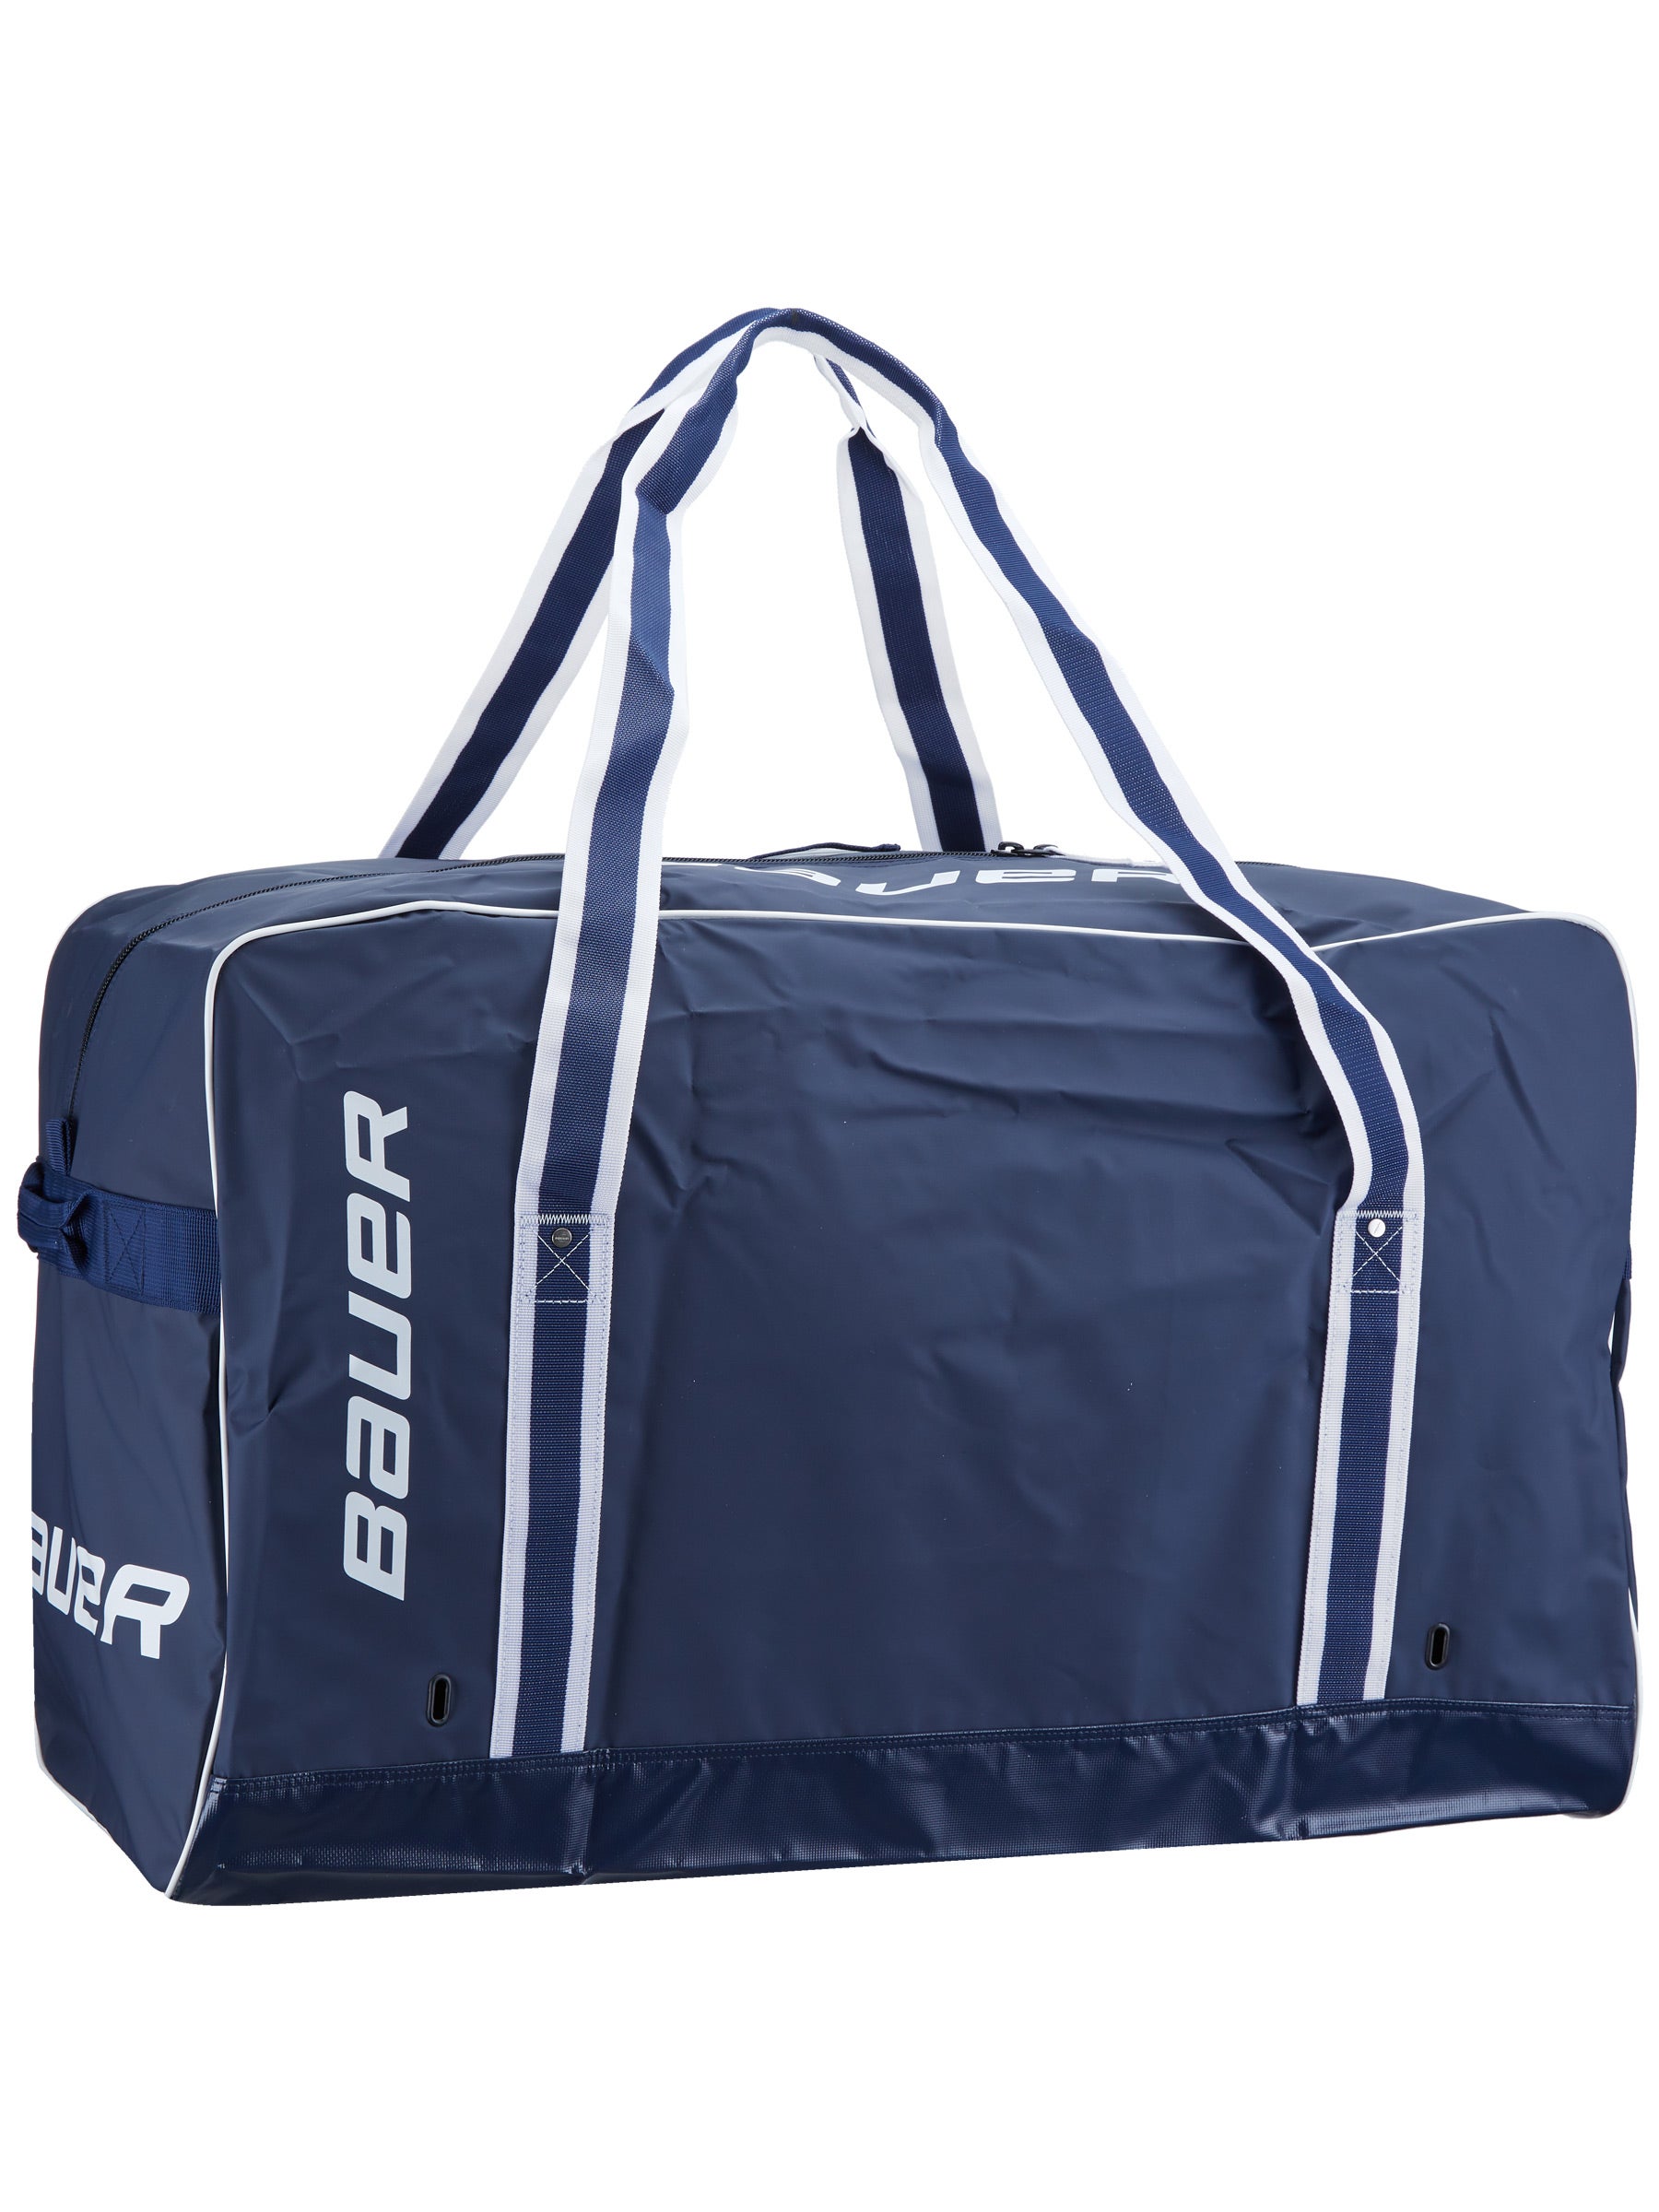 Eishockeytasche Bauer Pro 15 Carry Bag Large 